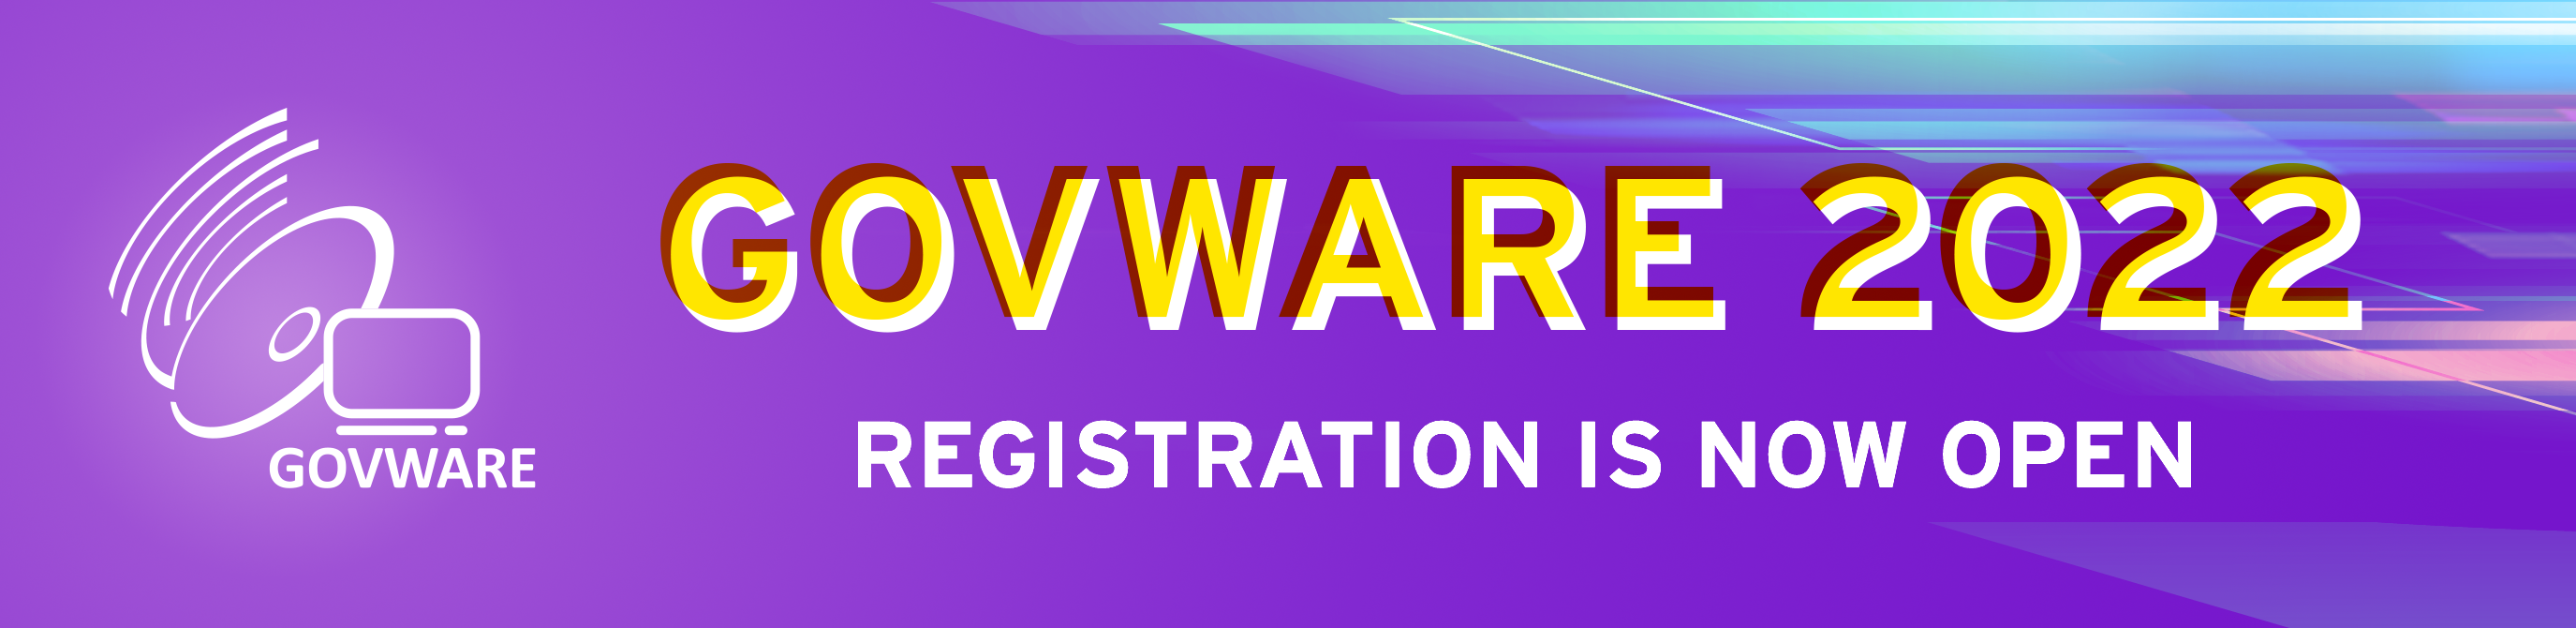 GovWare Conference & Exhibition 2022